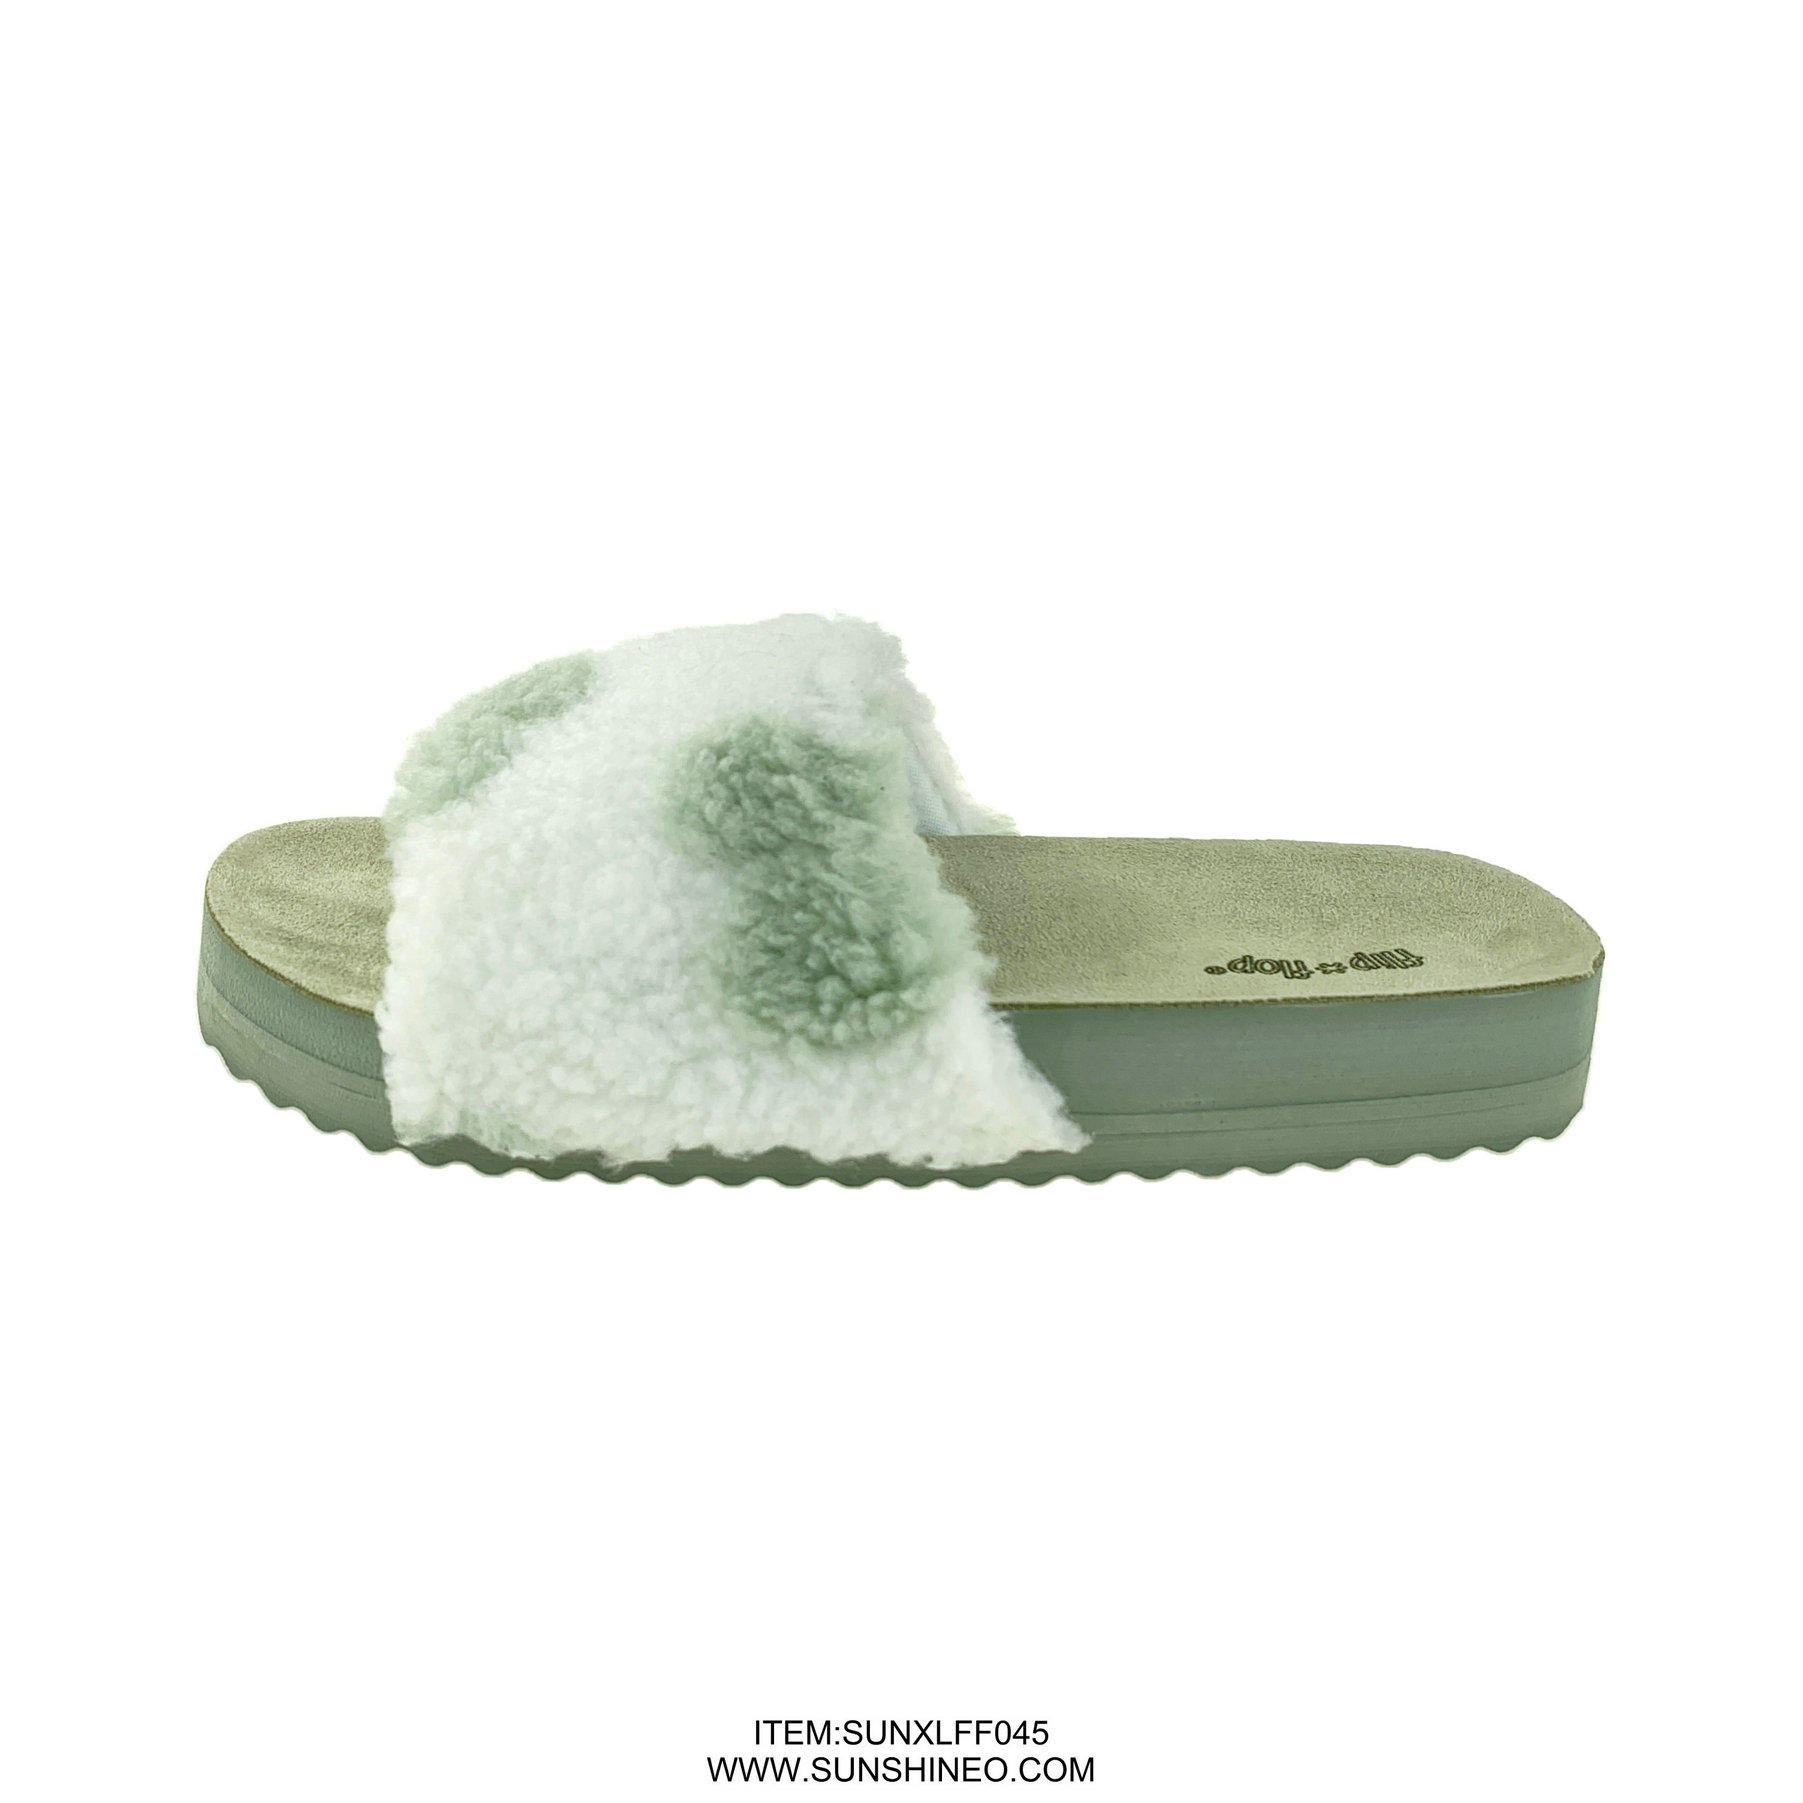 SUNXLFF045 fur flip flop sandals winter slippers